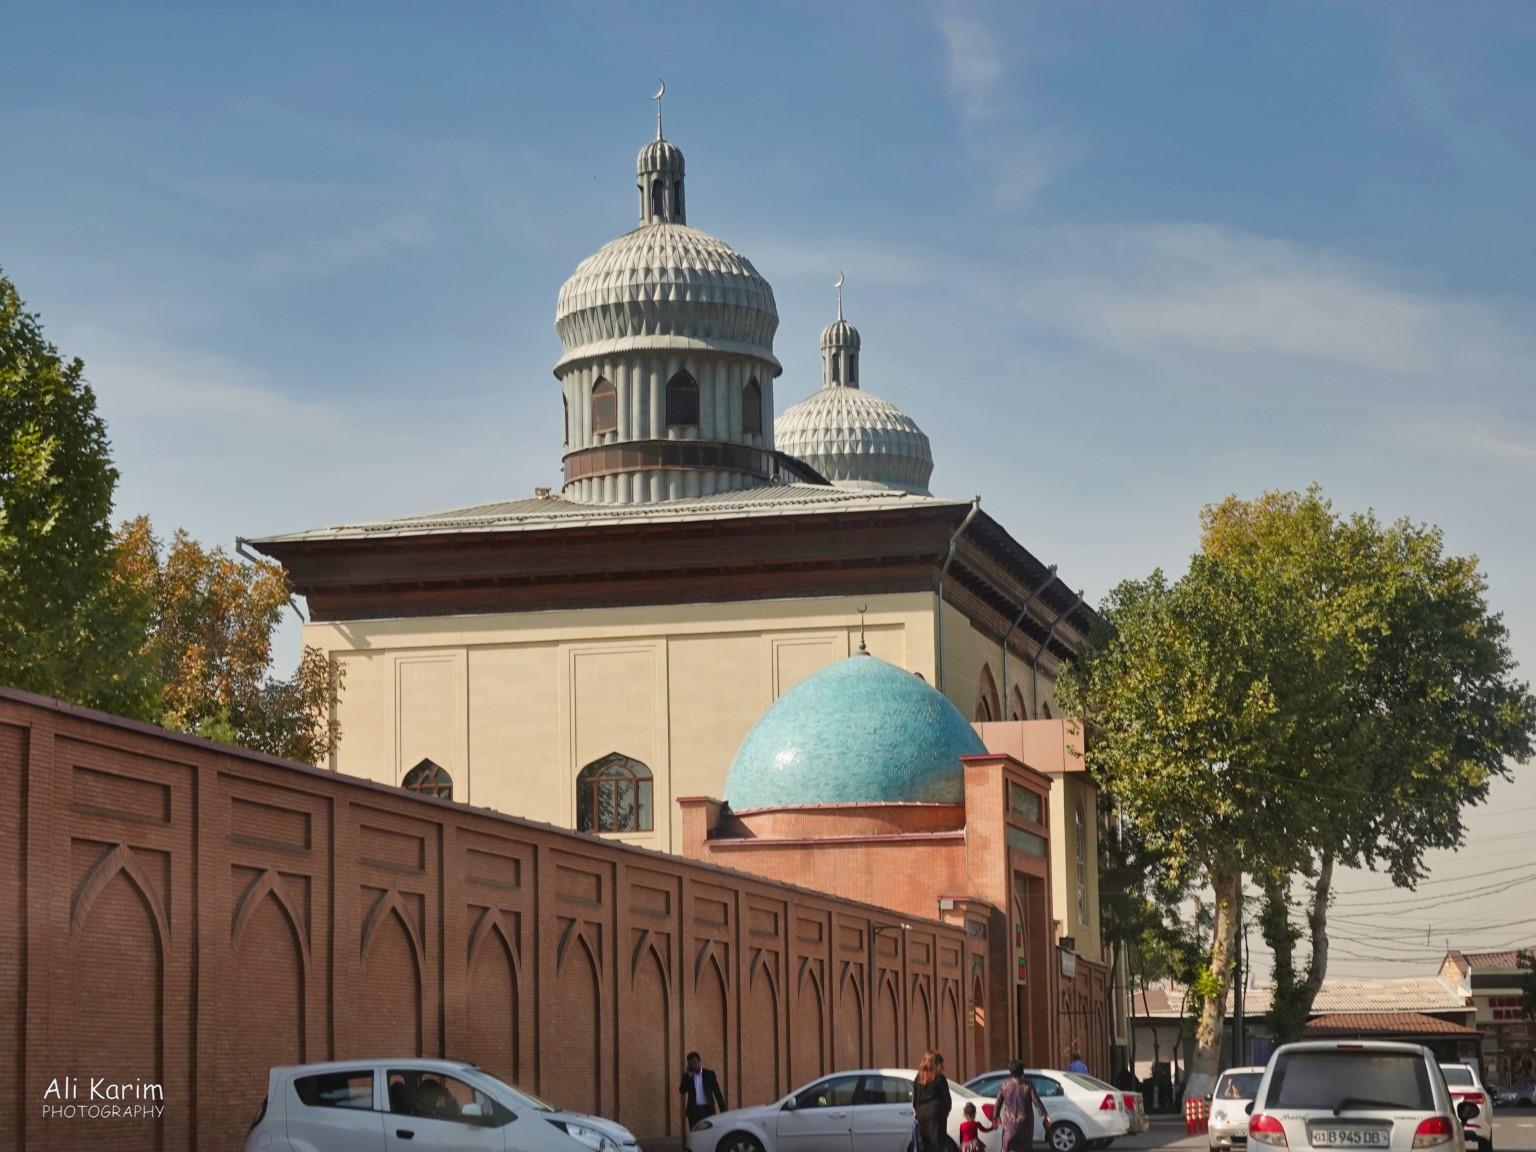 Tashkent, Oct 2019, Interesting Minaret design